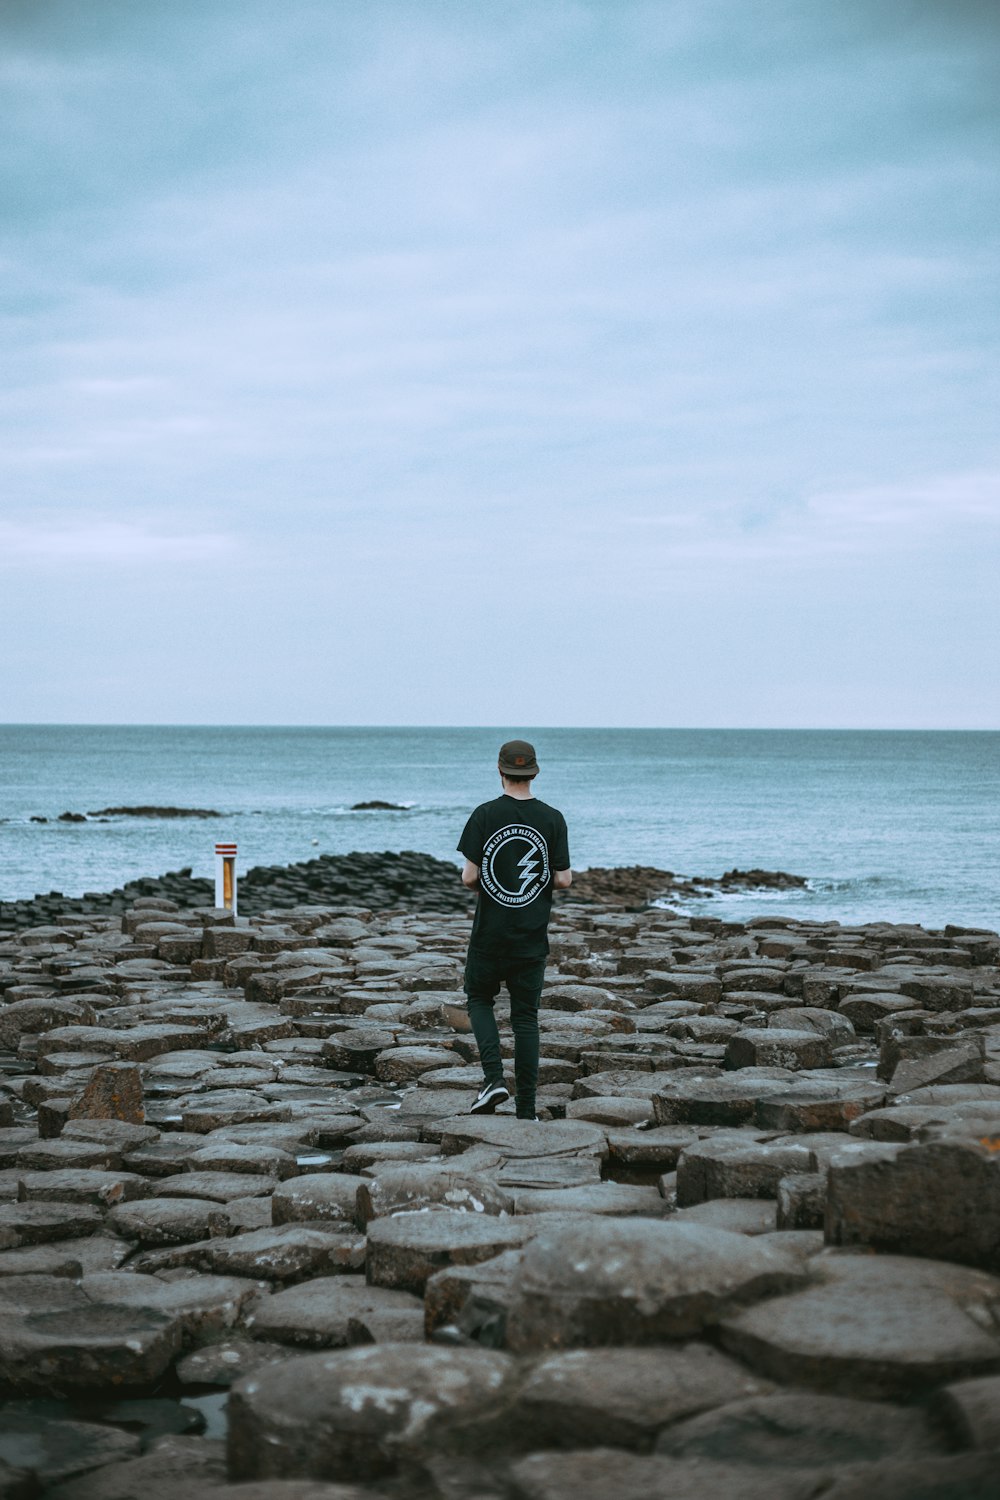 man wearing black shirt and pants walking on gray rock beside body of water